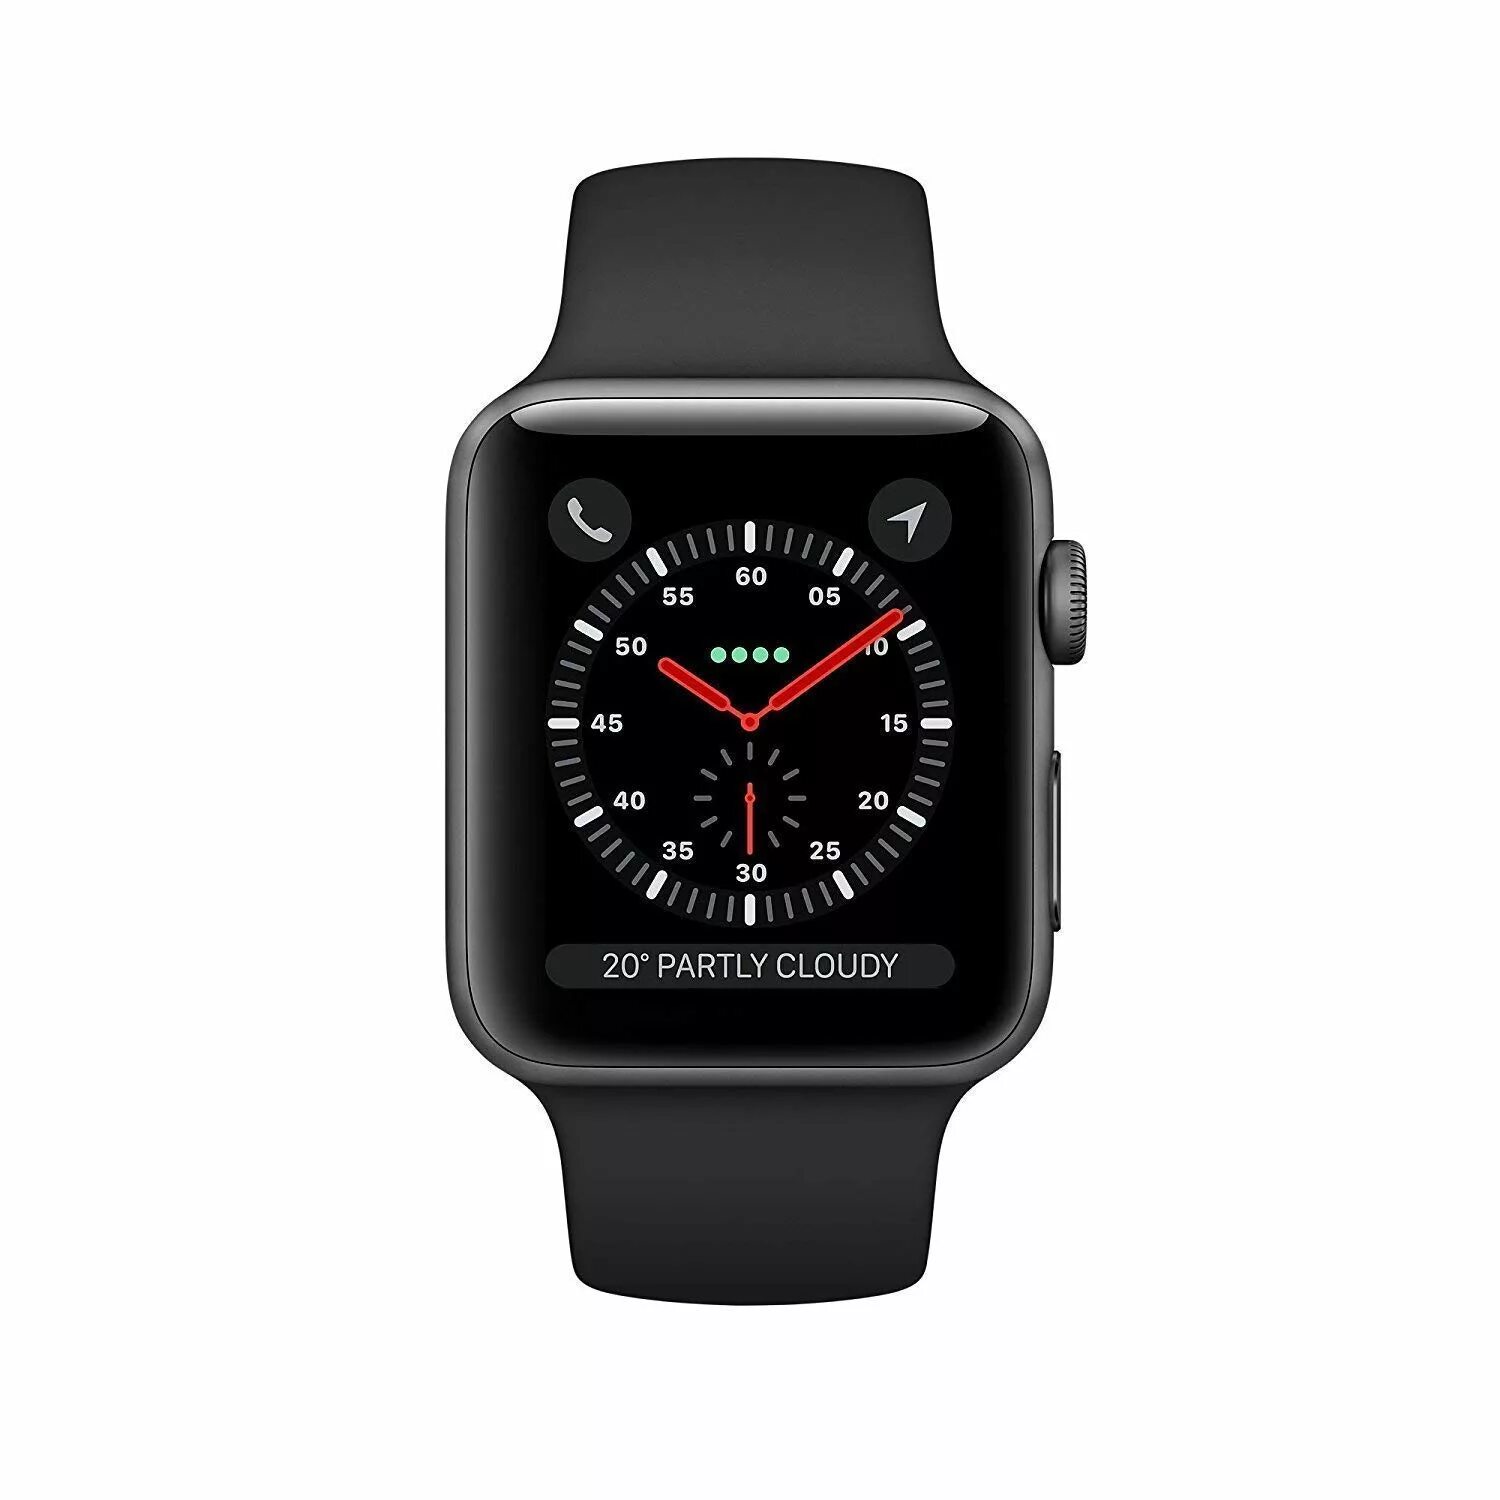 Watch часы 3 42mm. Apple watch 3. Эппл вотч 3 42. Смарт-часы Apple watch Series 3 42mm. Часы Apple IWATCH 3 42mm.